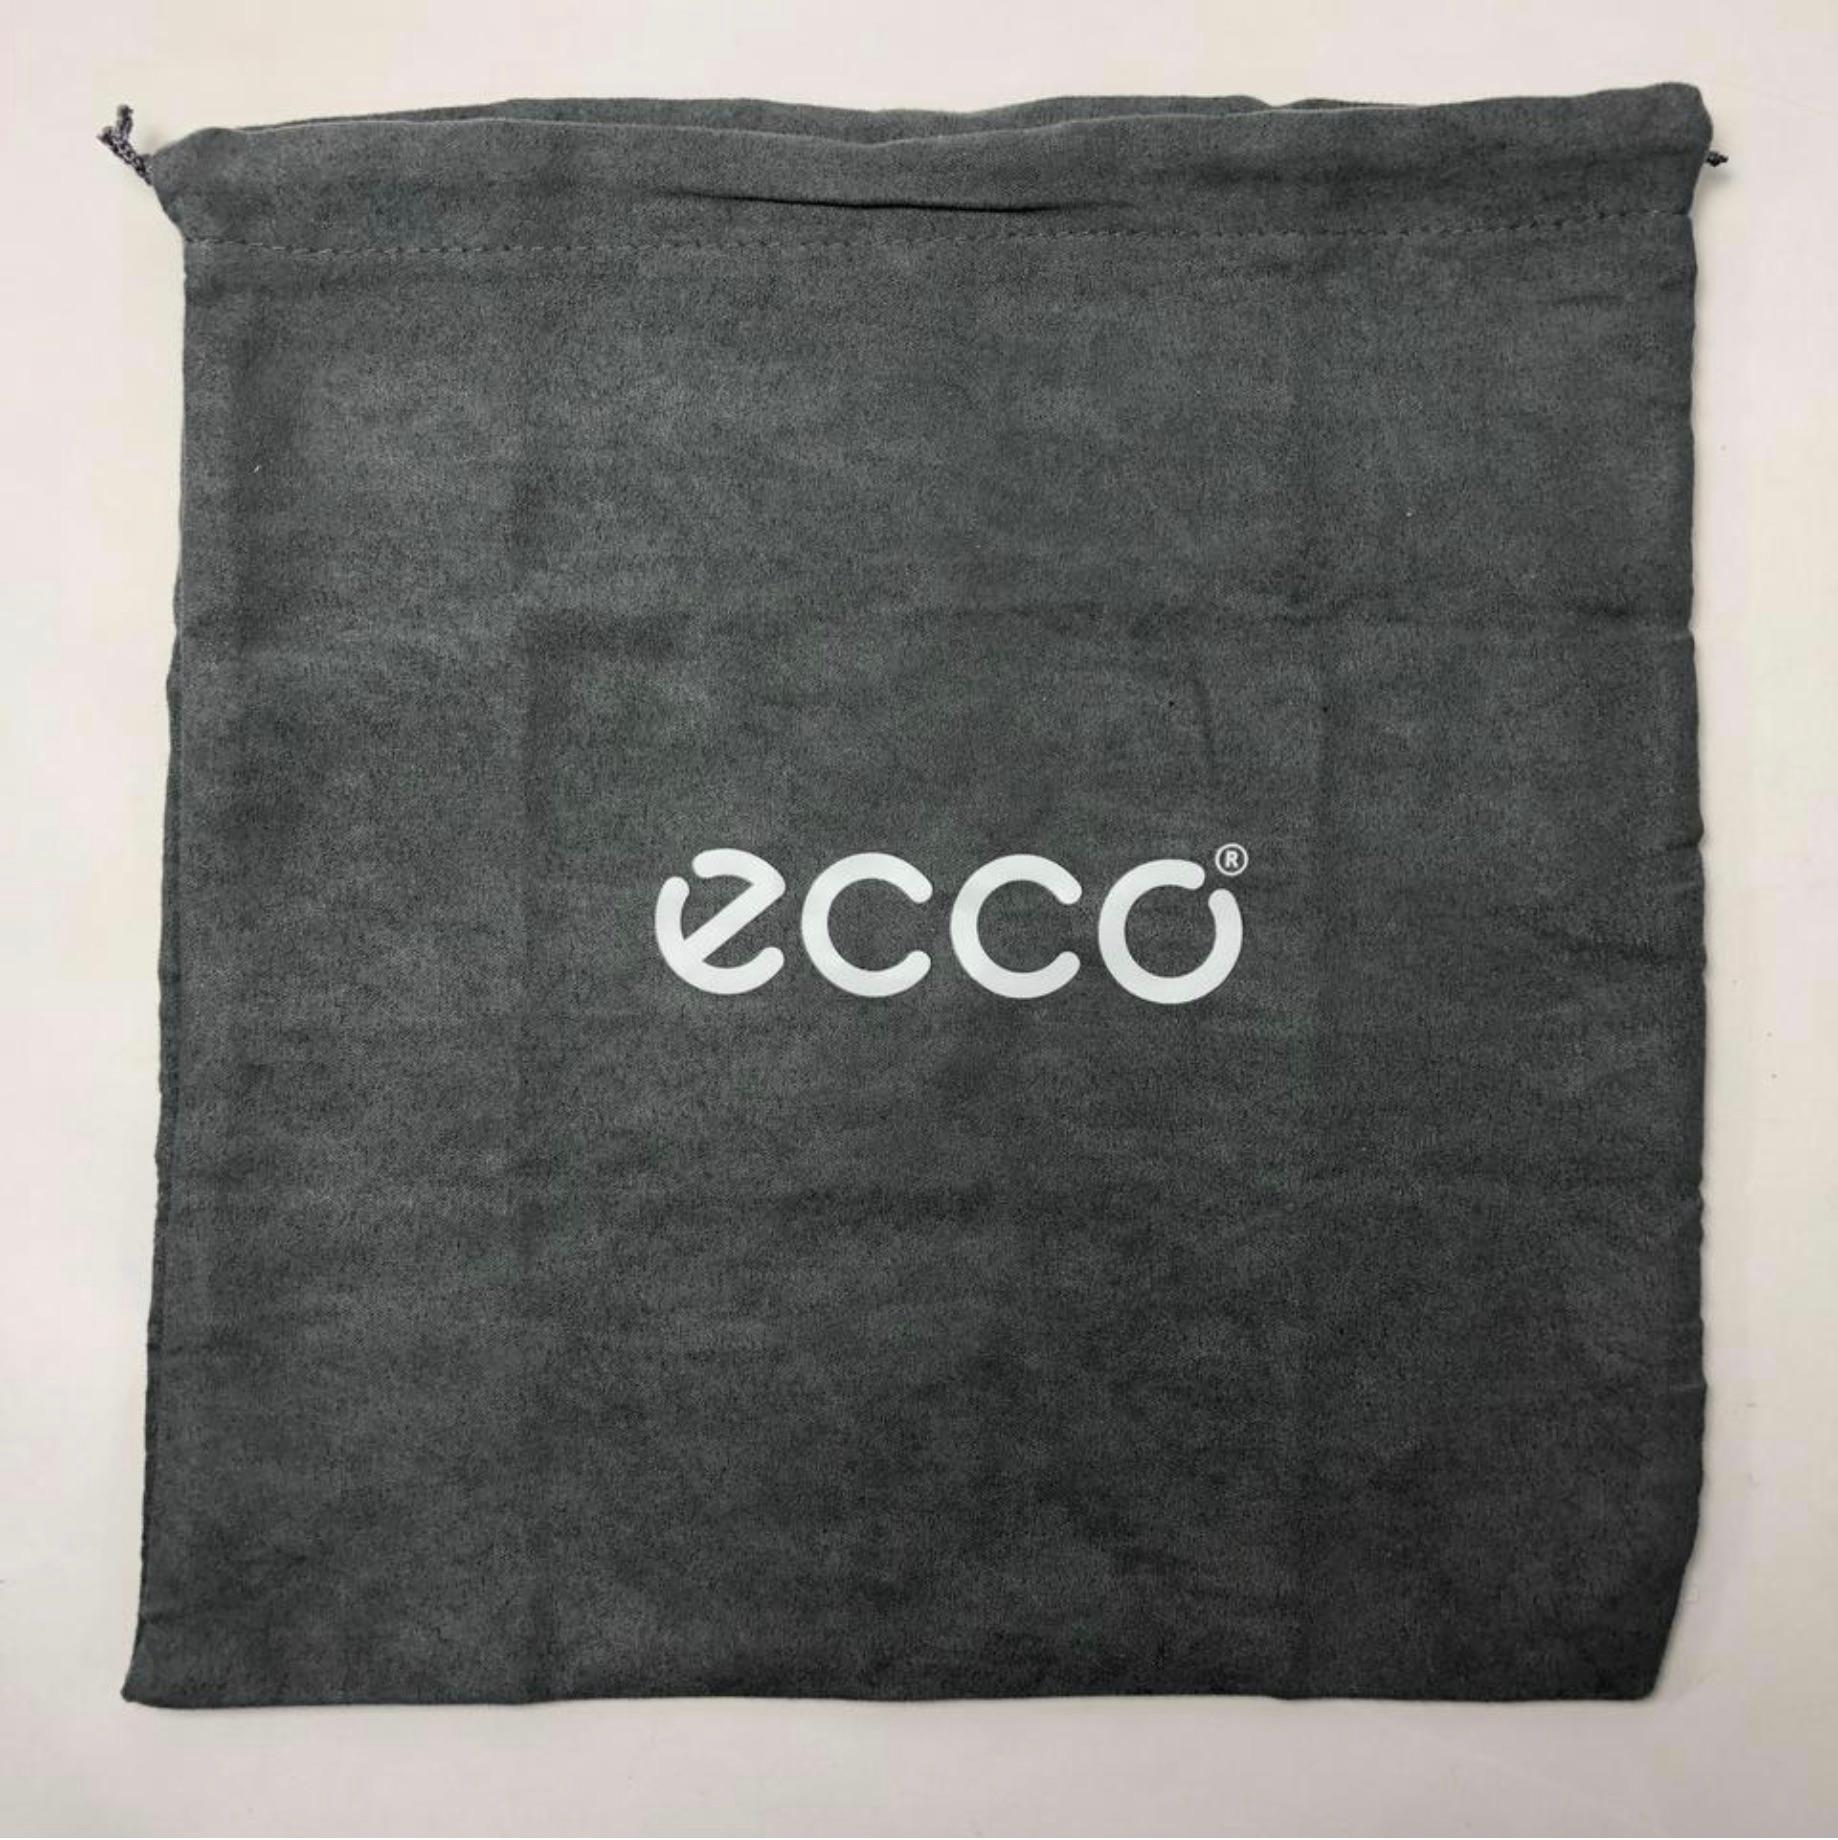  Ecco Fortine Crossbody Handbag in Dark Brown For Sale 2